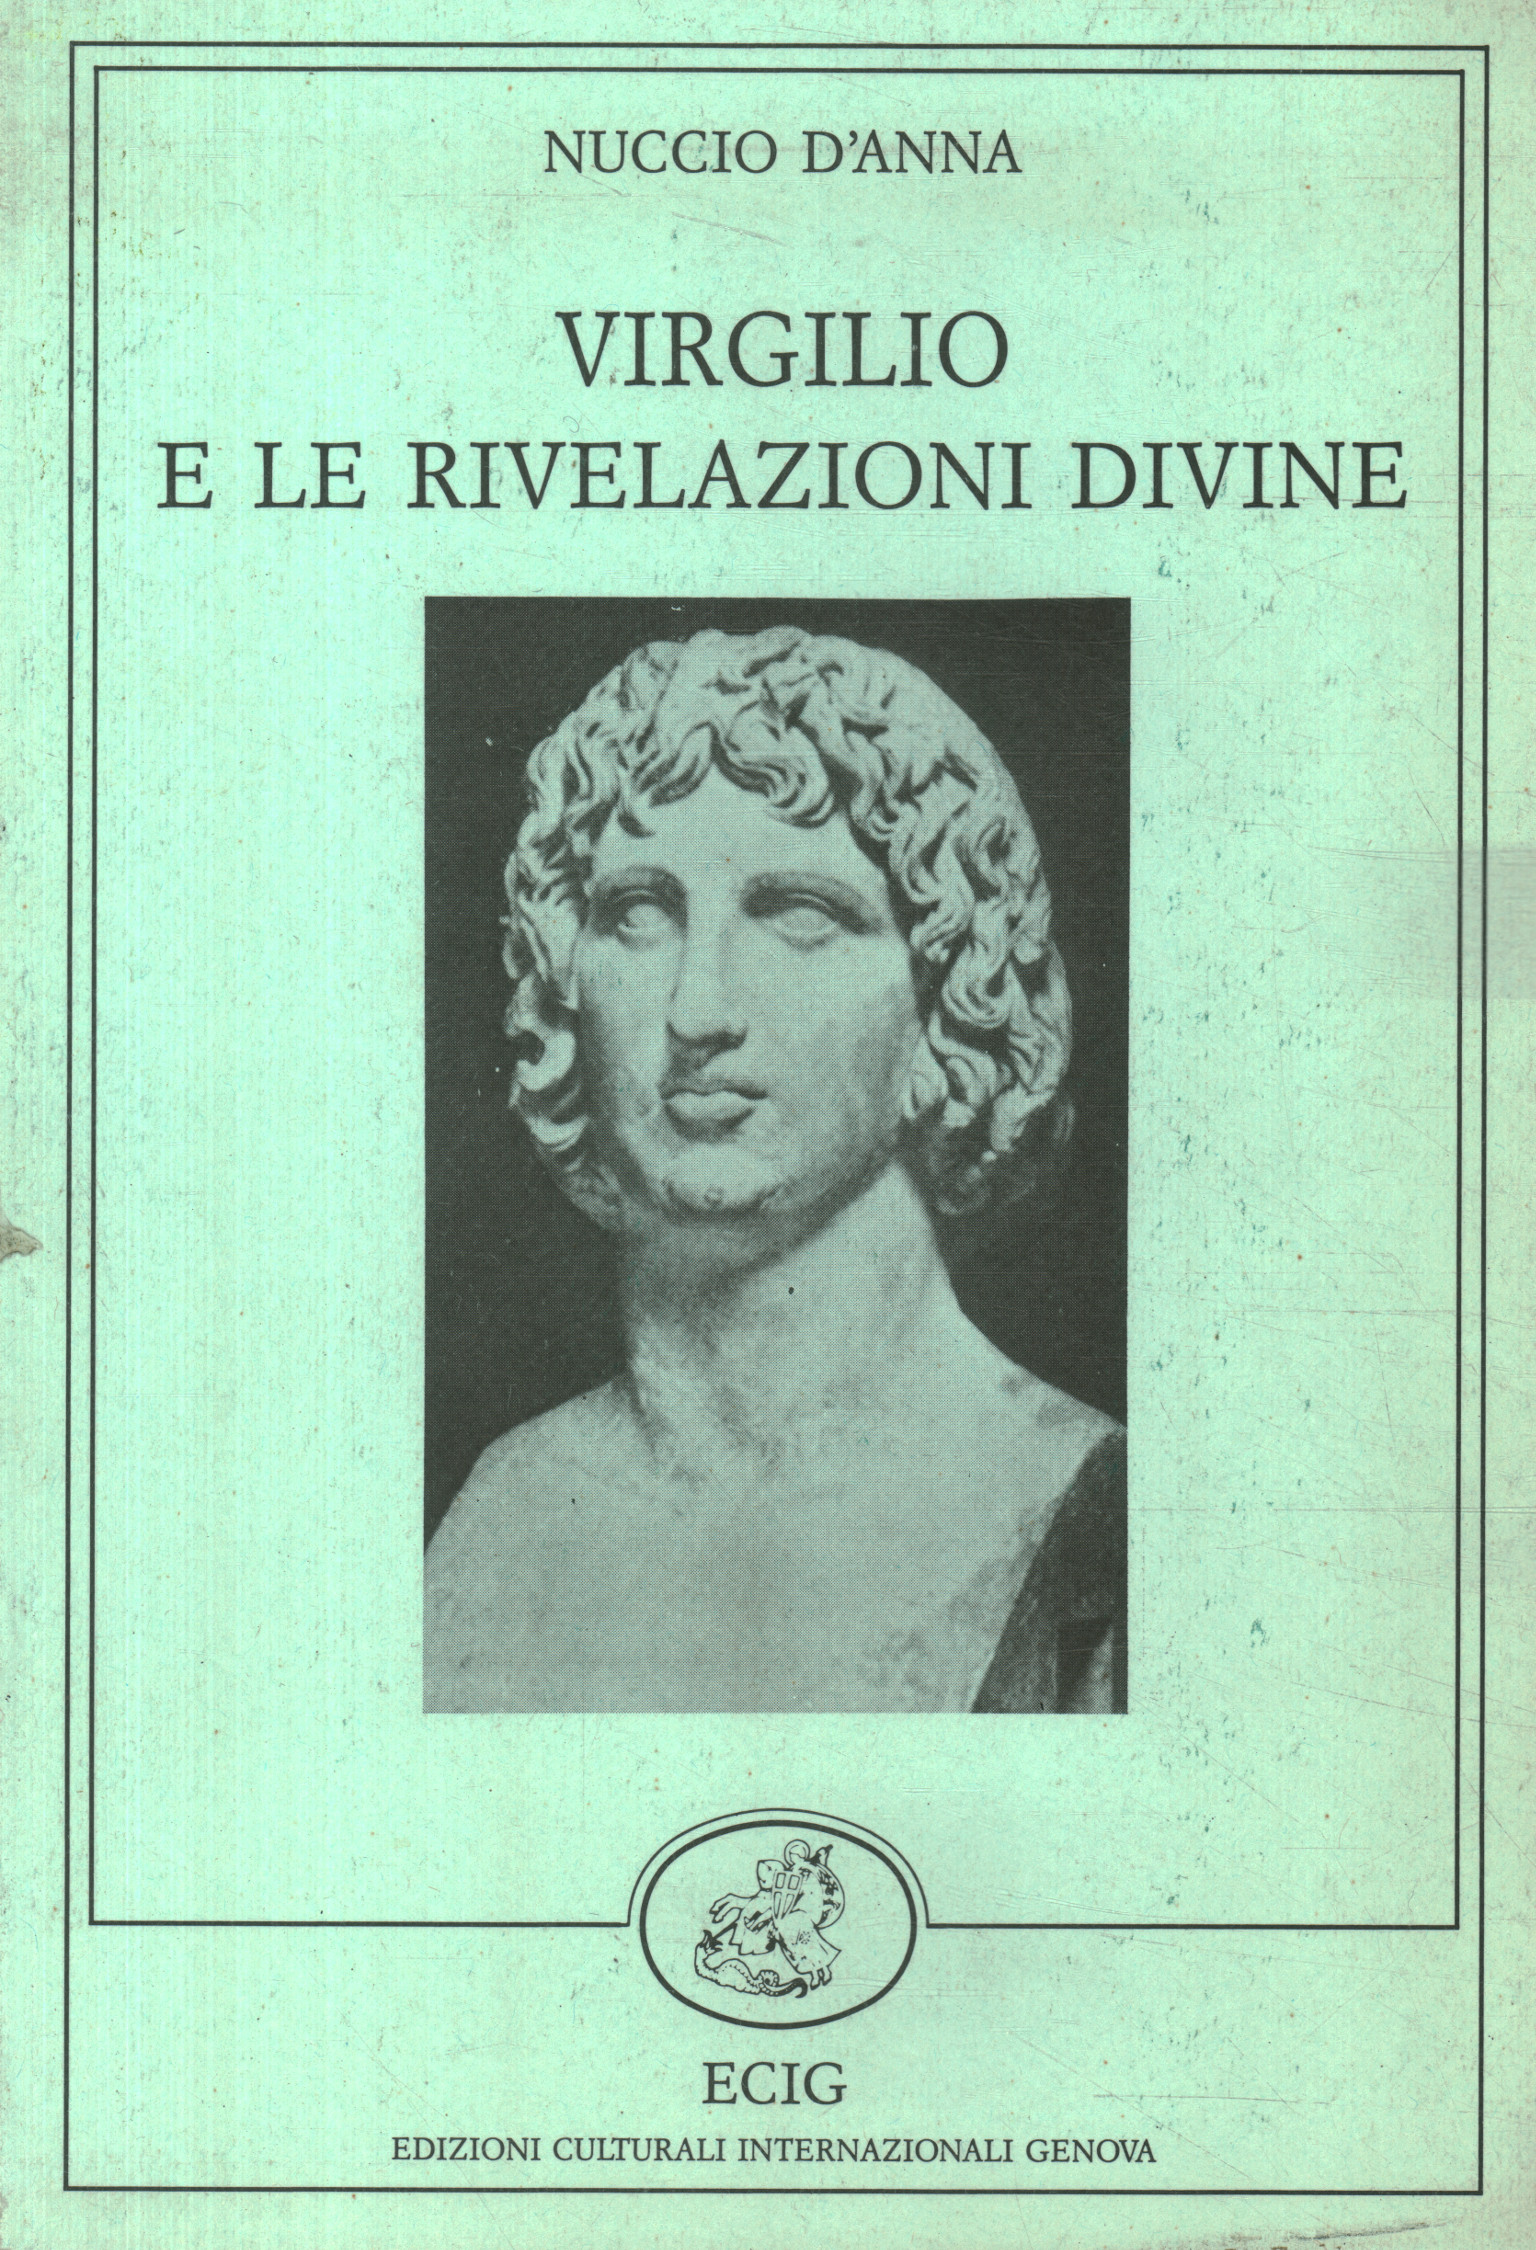 Virgil and divine revelations